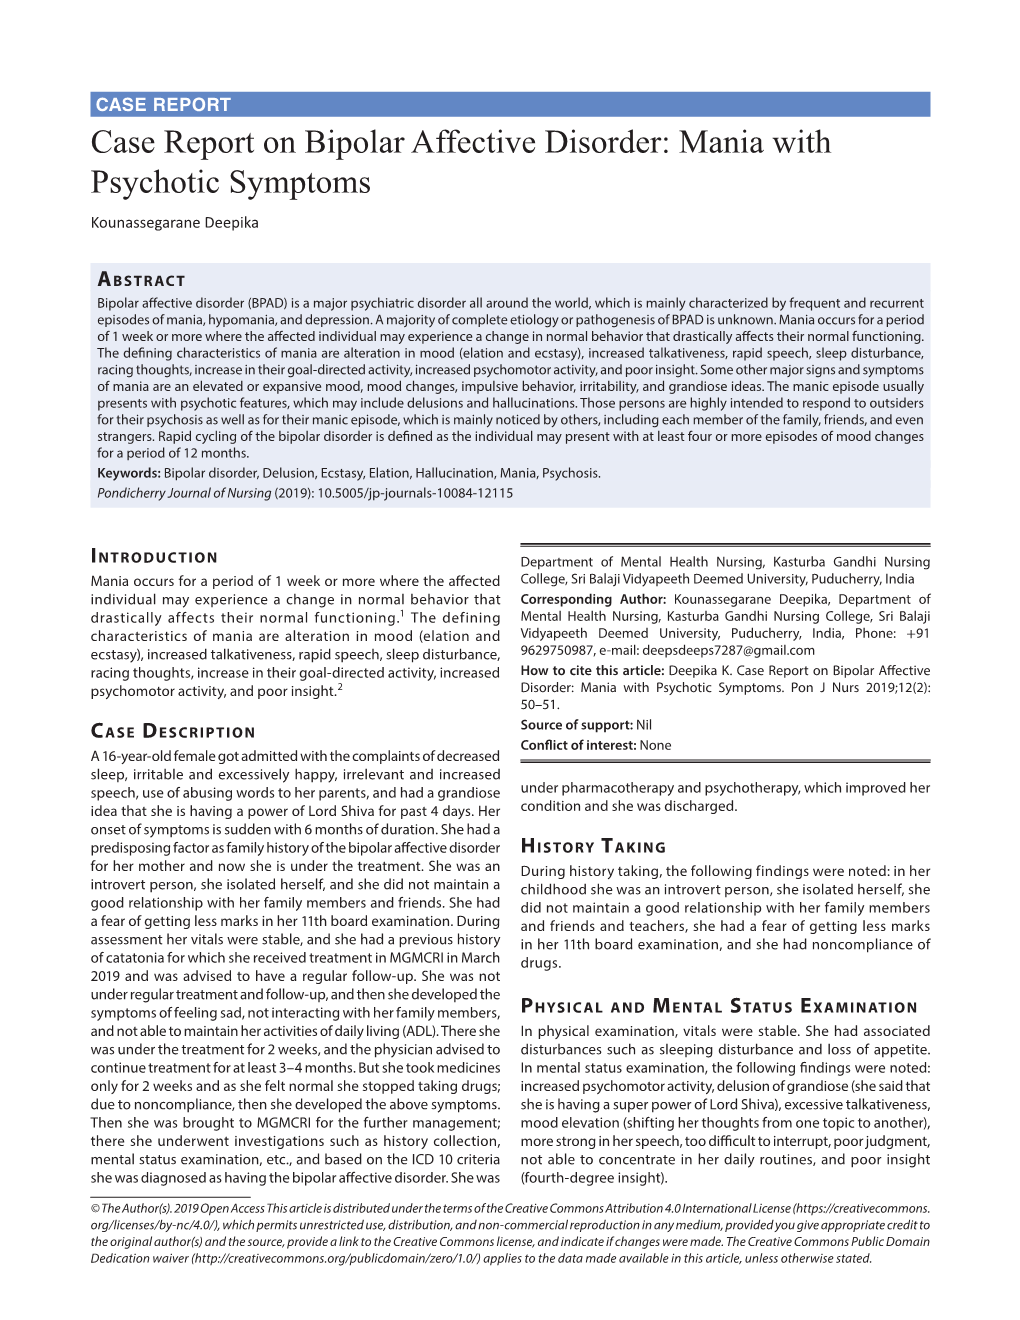 Case Report on Bipolar Affective Disorder: Mania with Psychotic Symptoms Kounassegarane Deepika